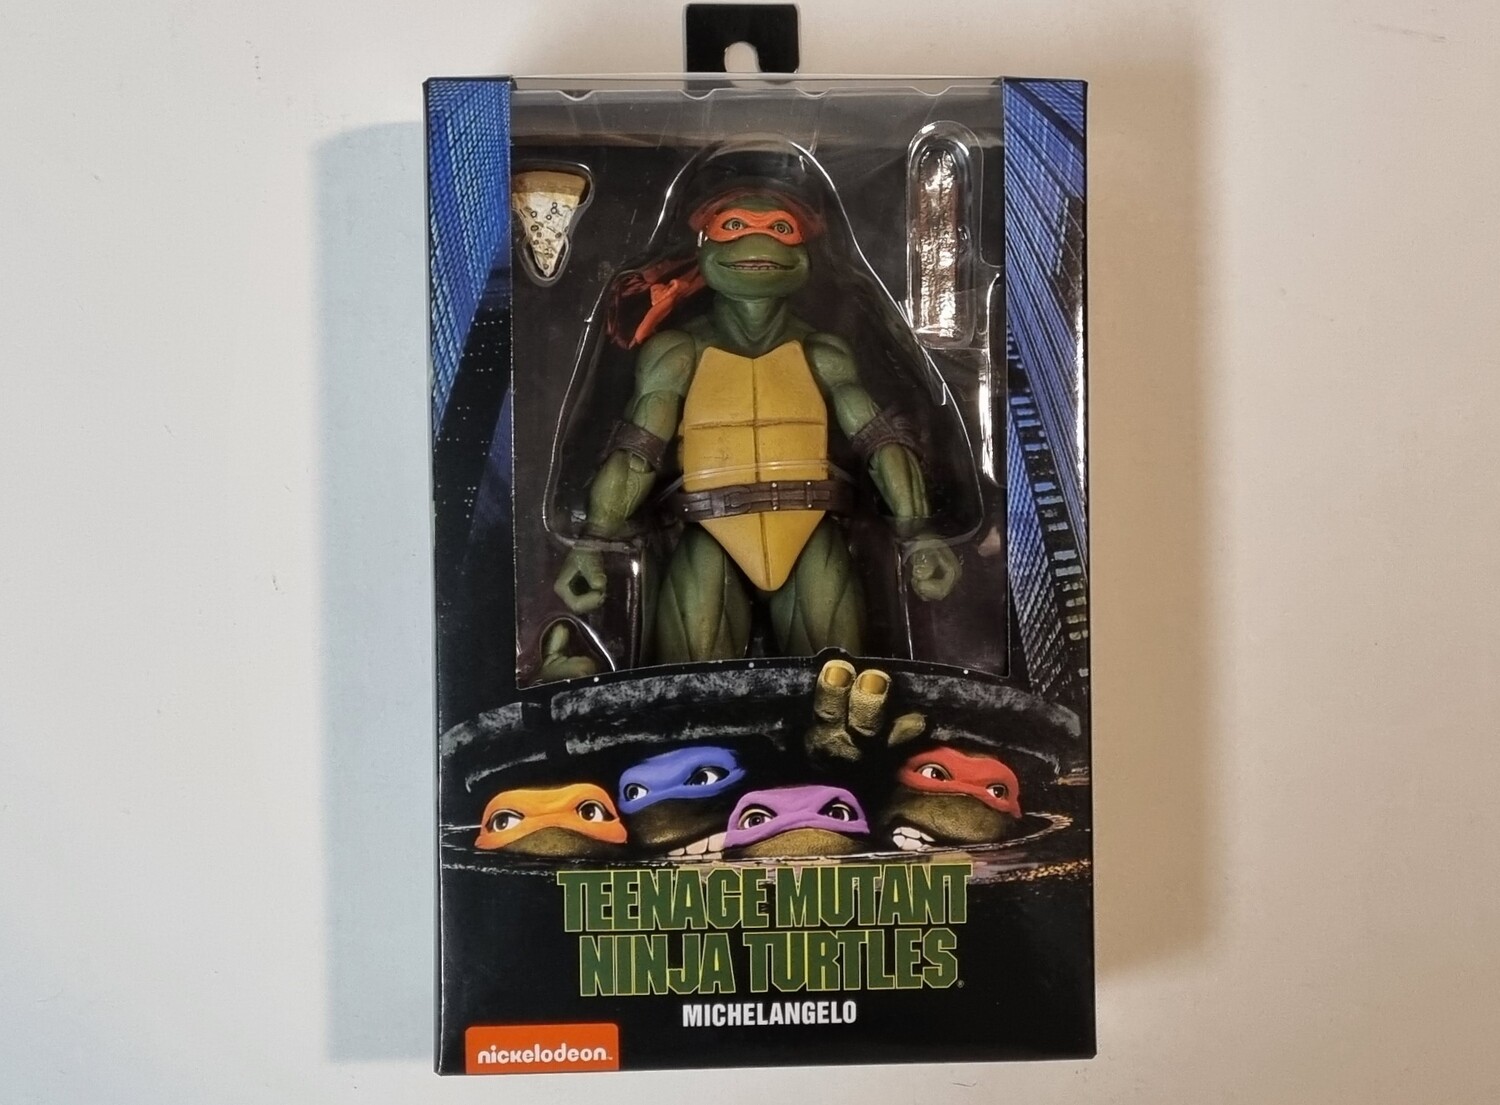 Actiefiguur, Michelangelo, Teenage Mutant Ninja Turtles, TMNT